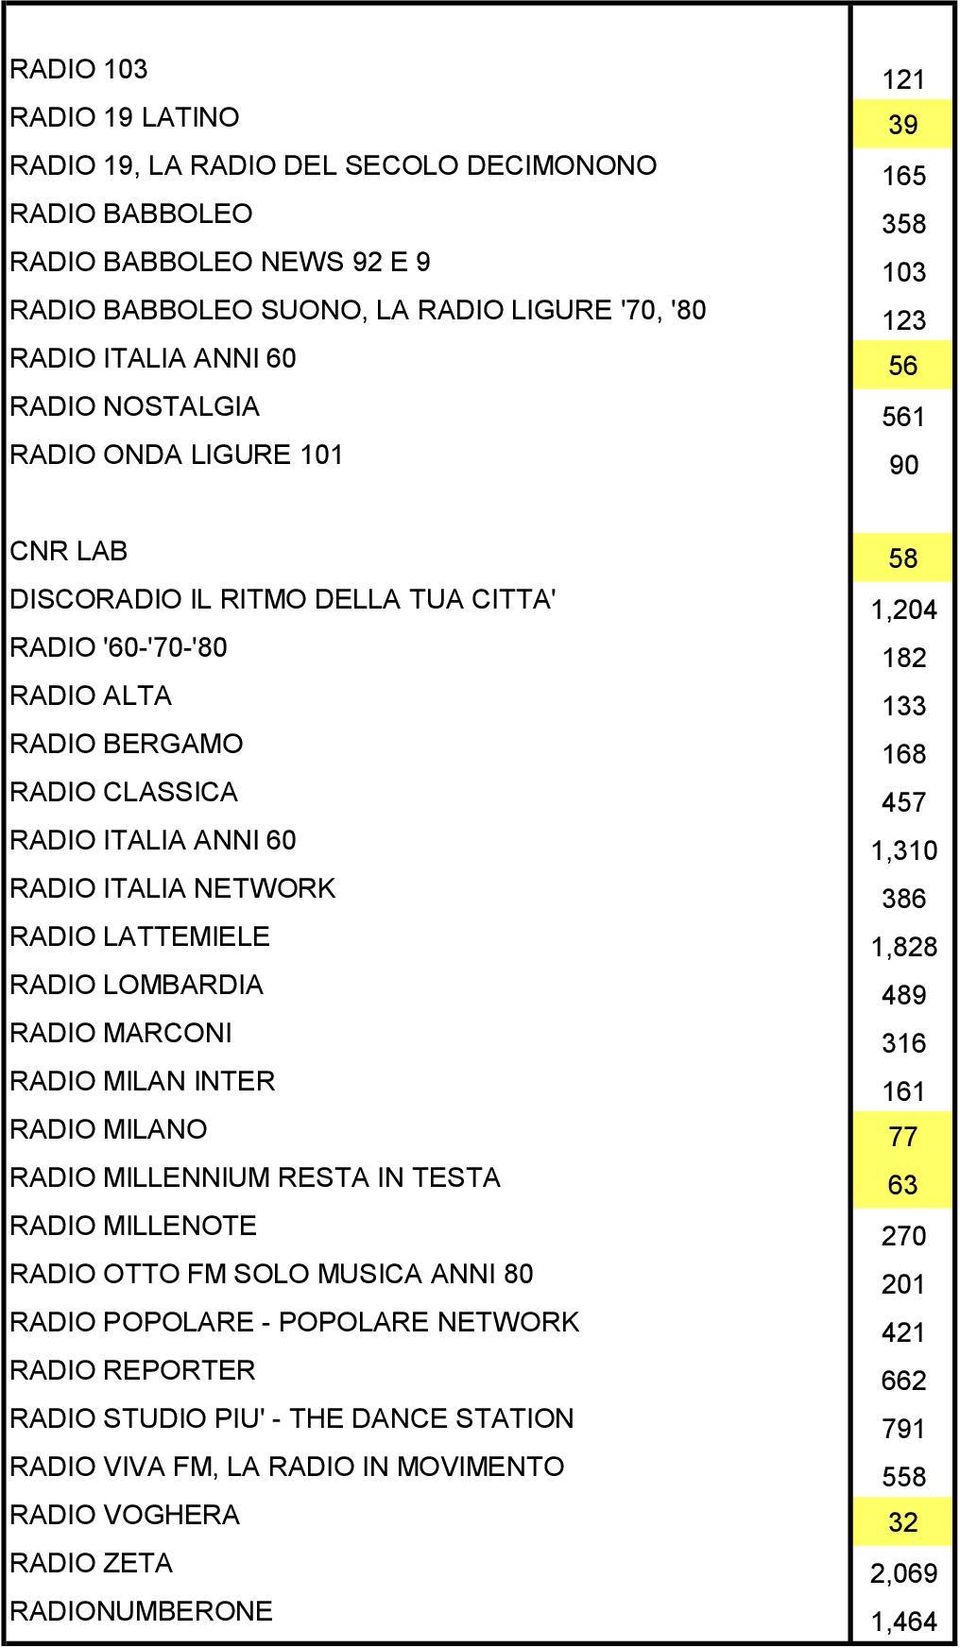 1,310 RADIO ITALIA NETWORK 386 RADIO LATTEMIELE 1,828 RADIO LOMBARDIA 489 RADIO MARCONI 316 RADIO MILAN INTER 161 RADIO MILANO 77 RADIO MILLENNIUM RESTA IN TESTA 63 RADIO MILLENOTE 270 RADIO OTTO FM